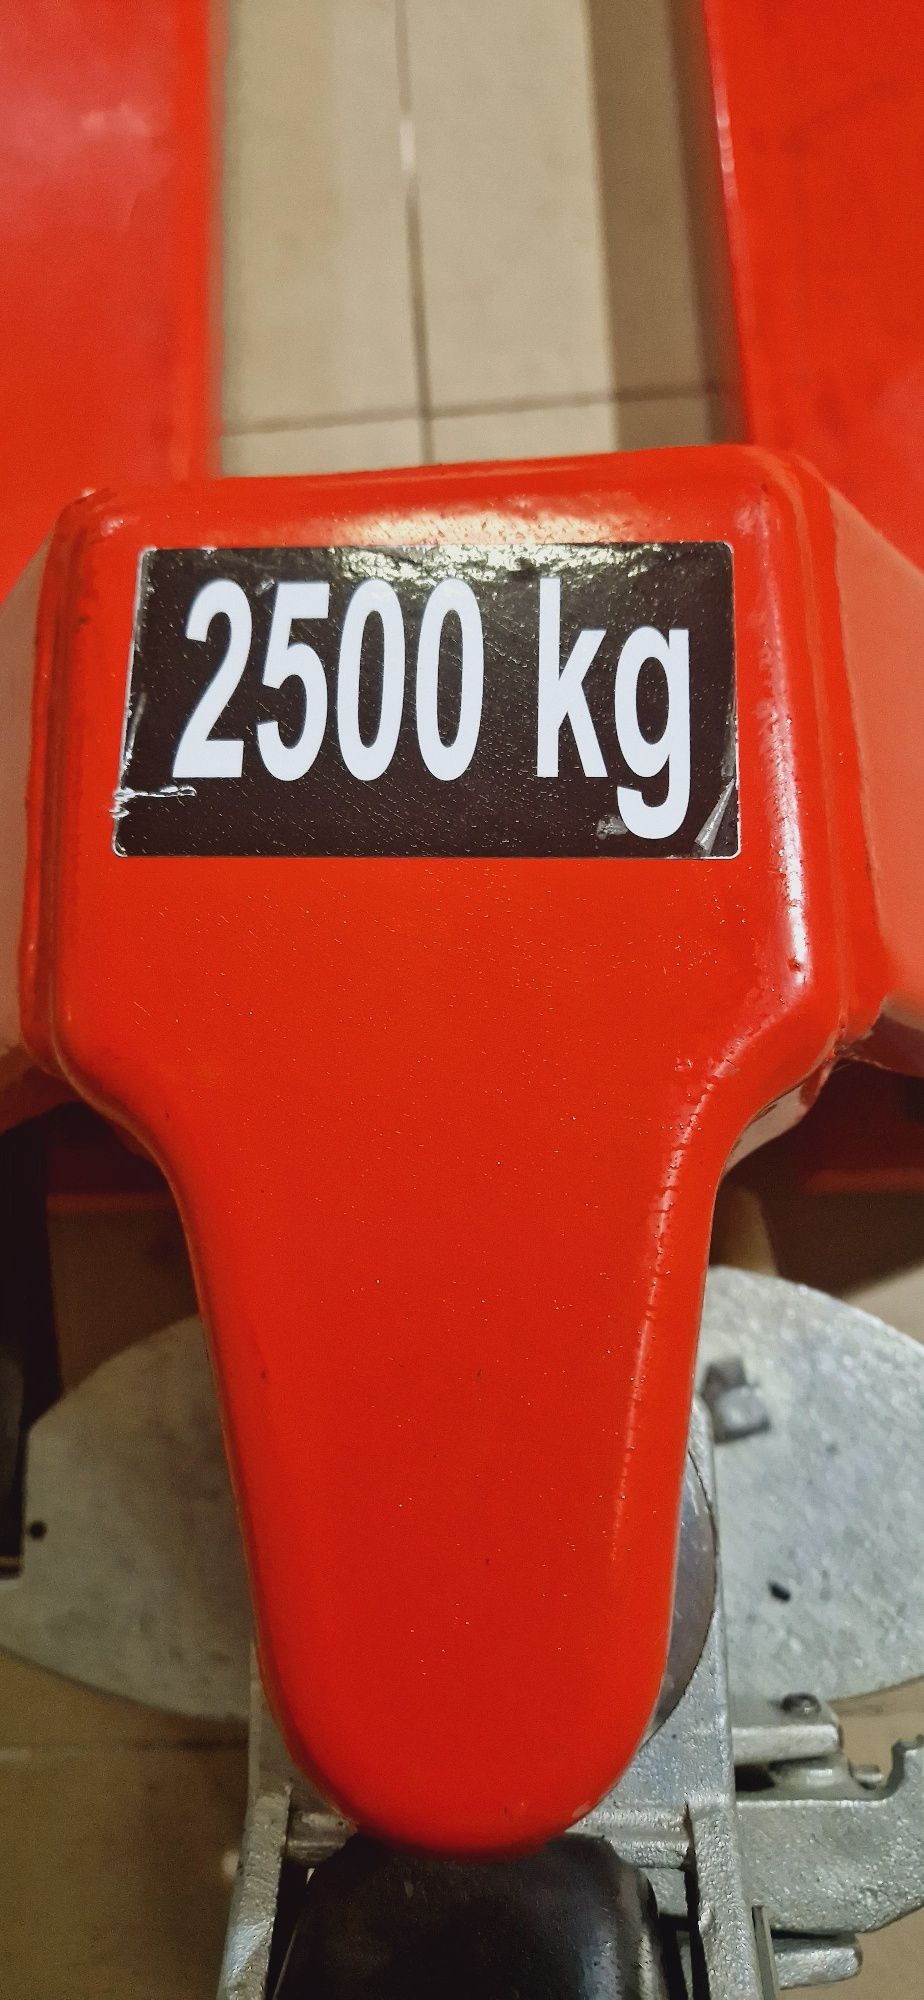 Paleciak wózek 2500 kg